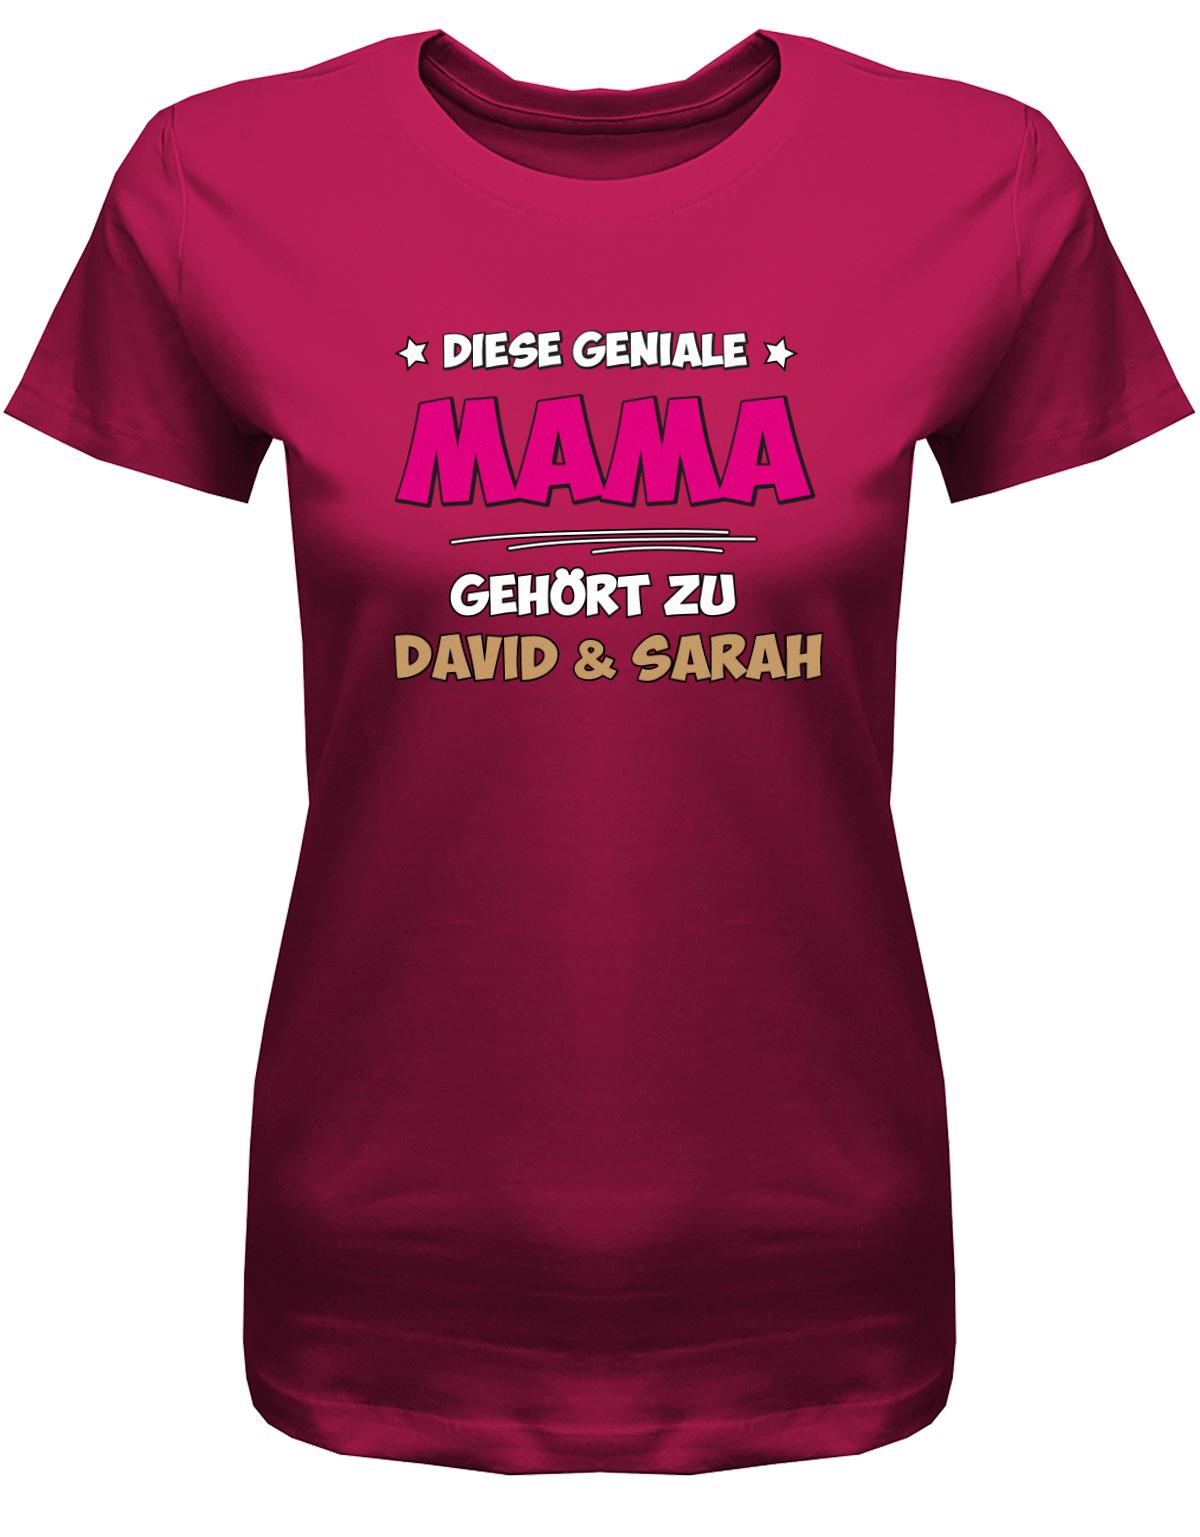 Diese-geniale-Mama-geh-rt-zu-Wunschnamen-Damen-Mama-Shirt-Sorbet